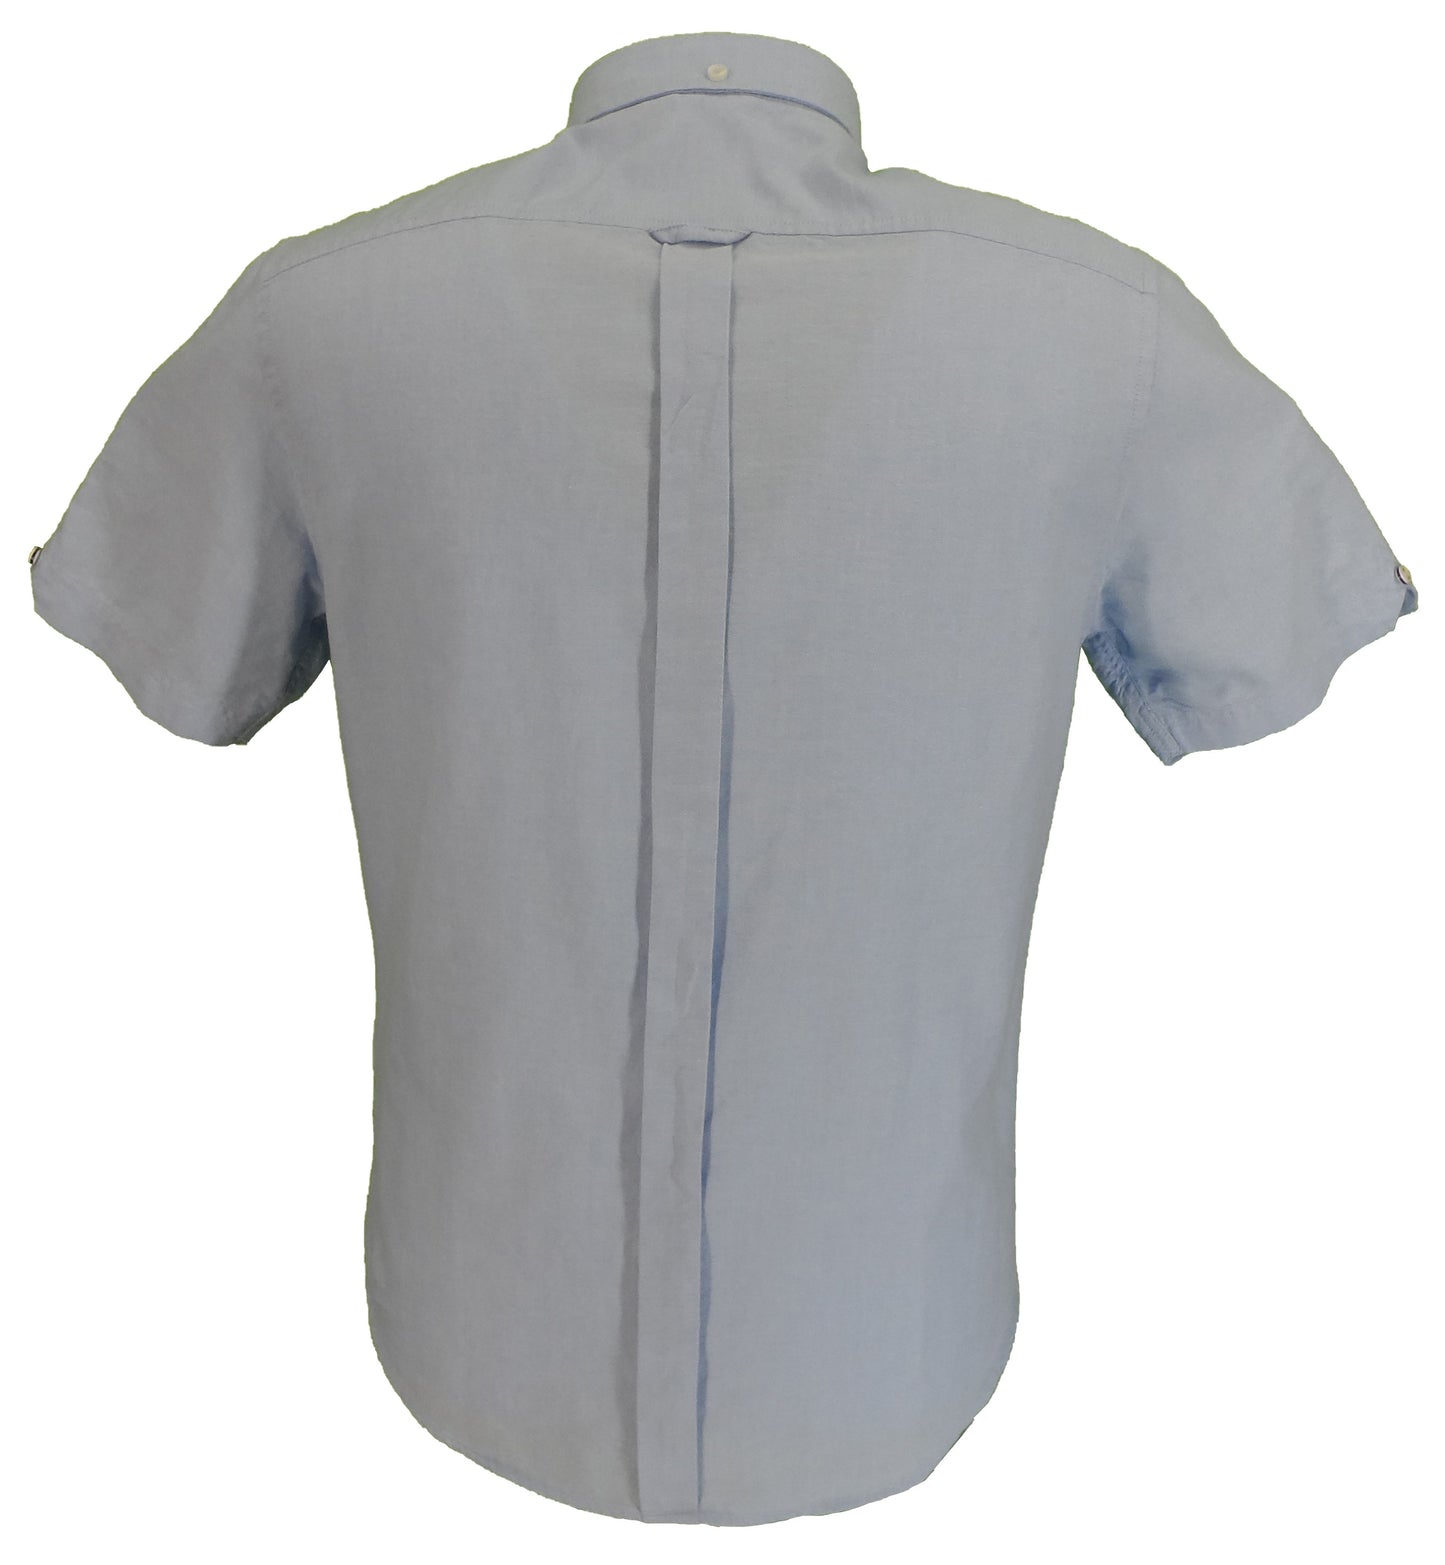 Camicie da uomo Ben Sherman blu oxford a maniche corte in cotone 100%.